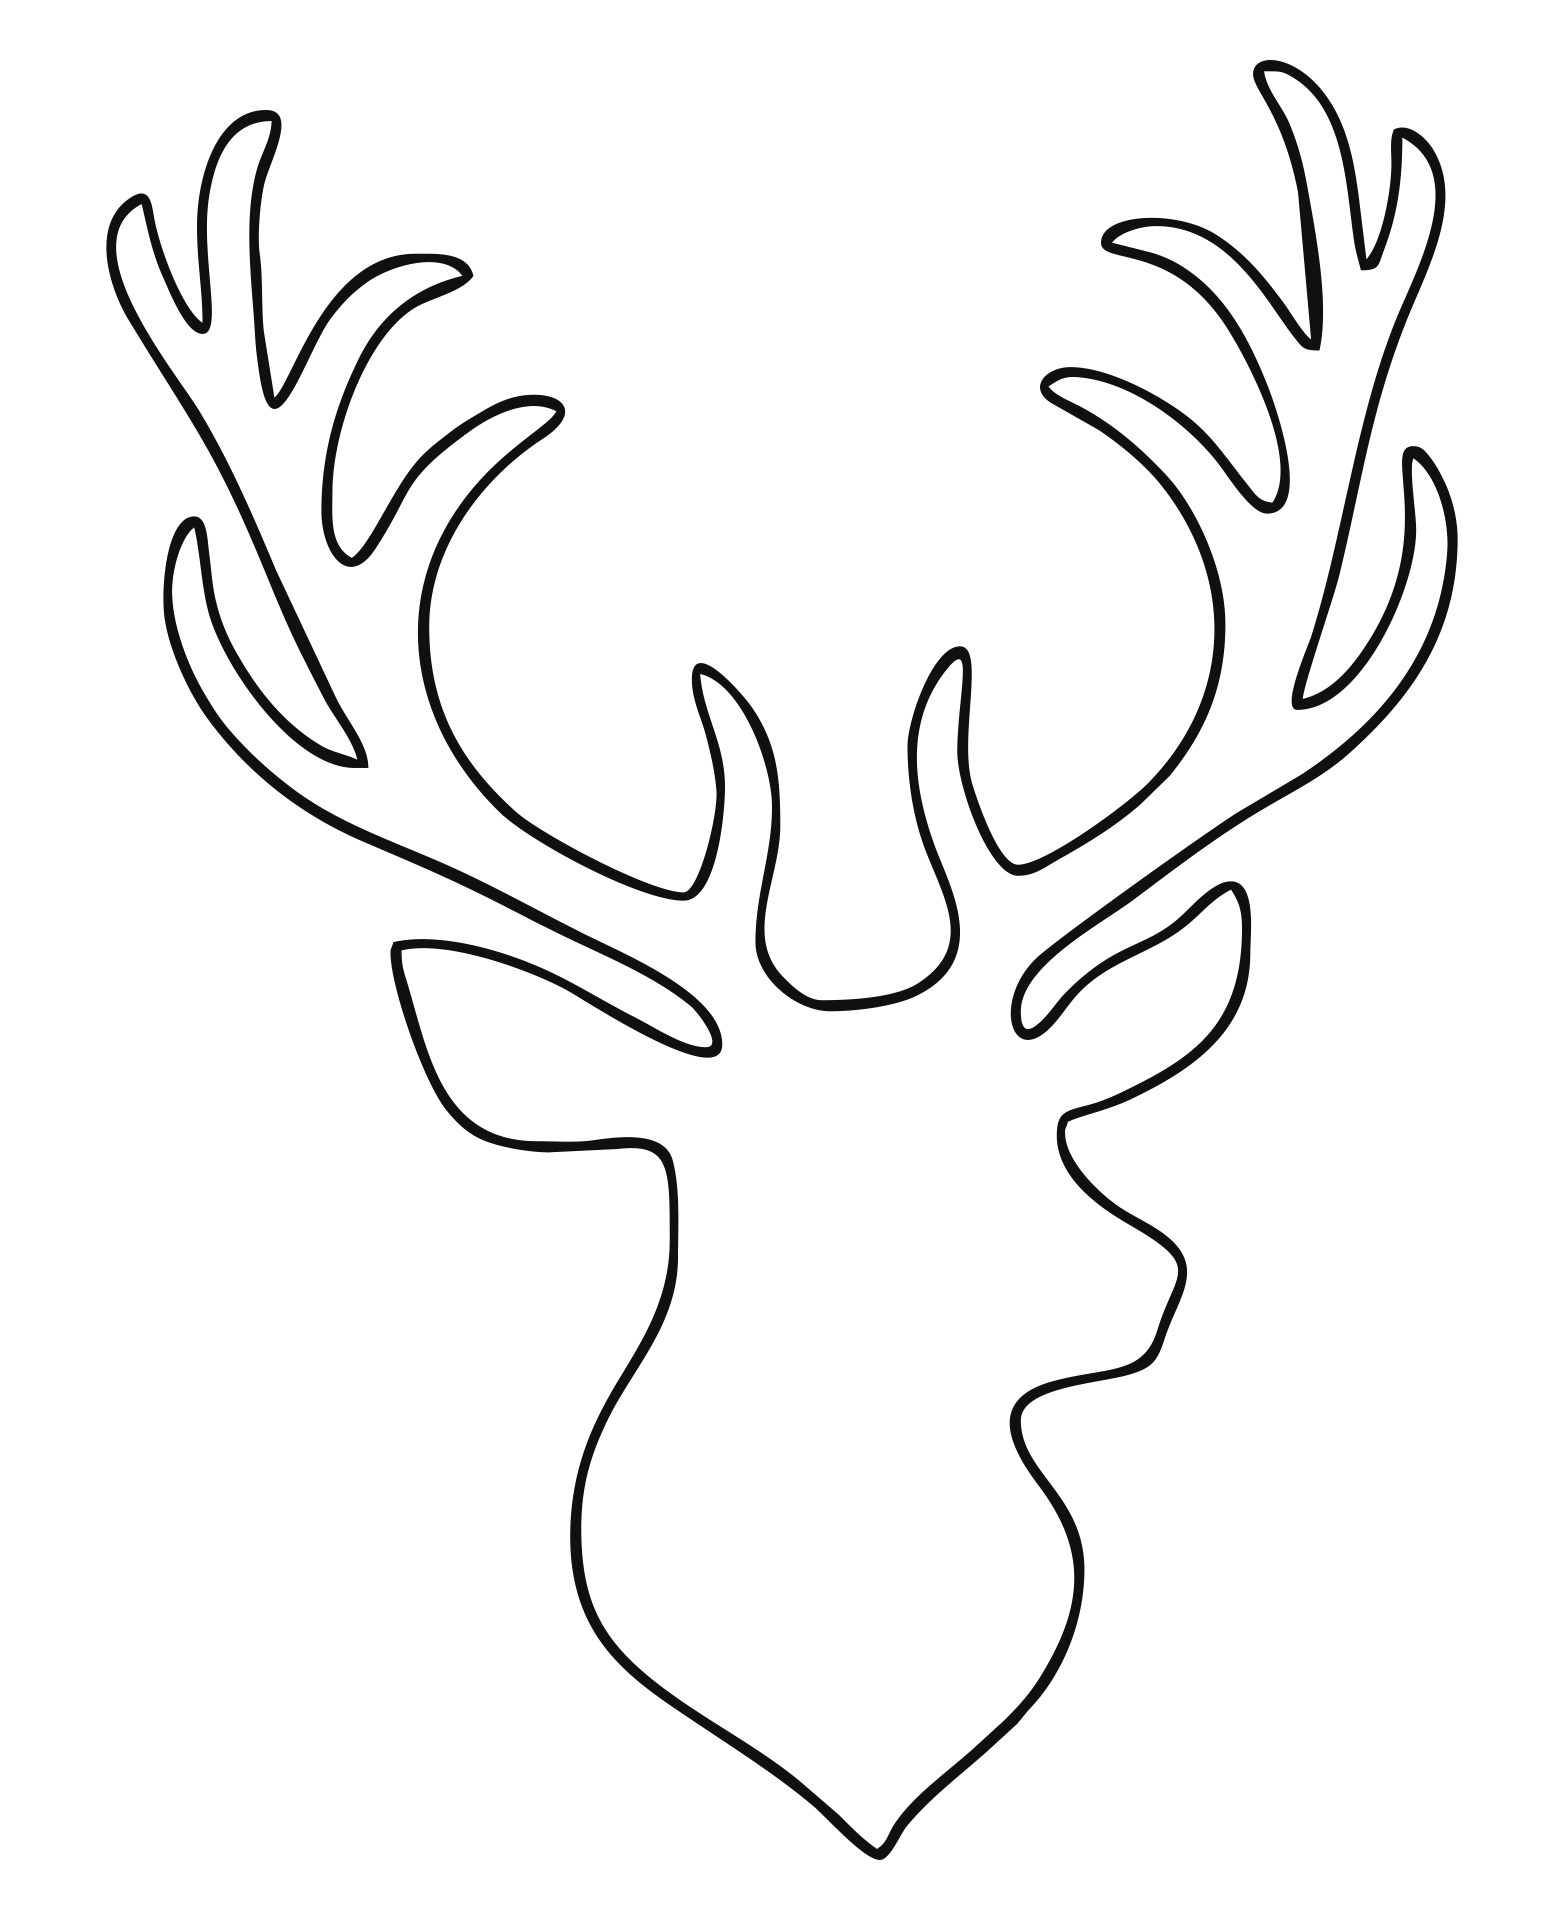 bandsaw-reindeer-plans-with-instructions-pdf-download-etsy-uk